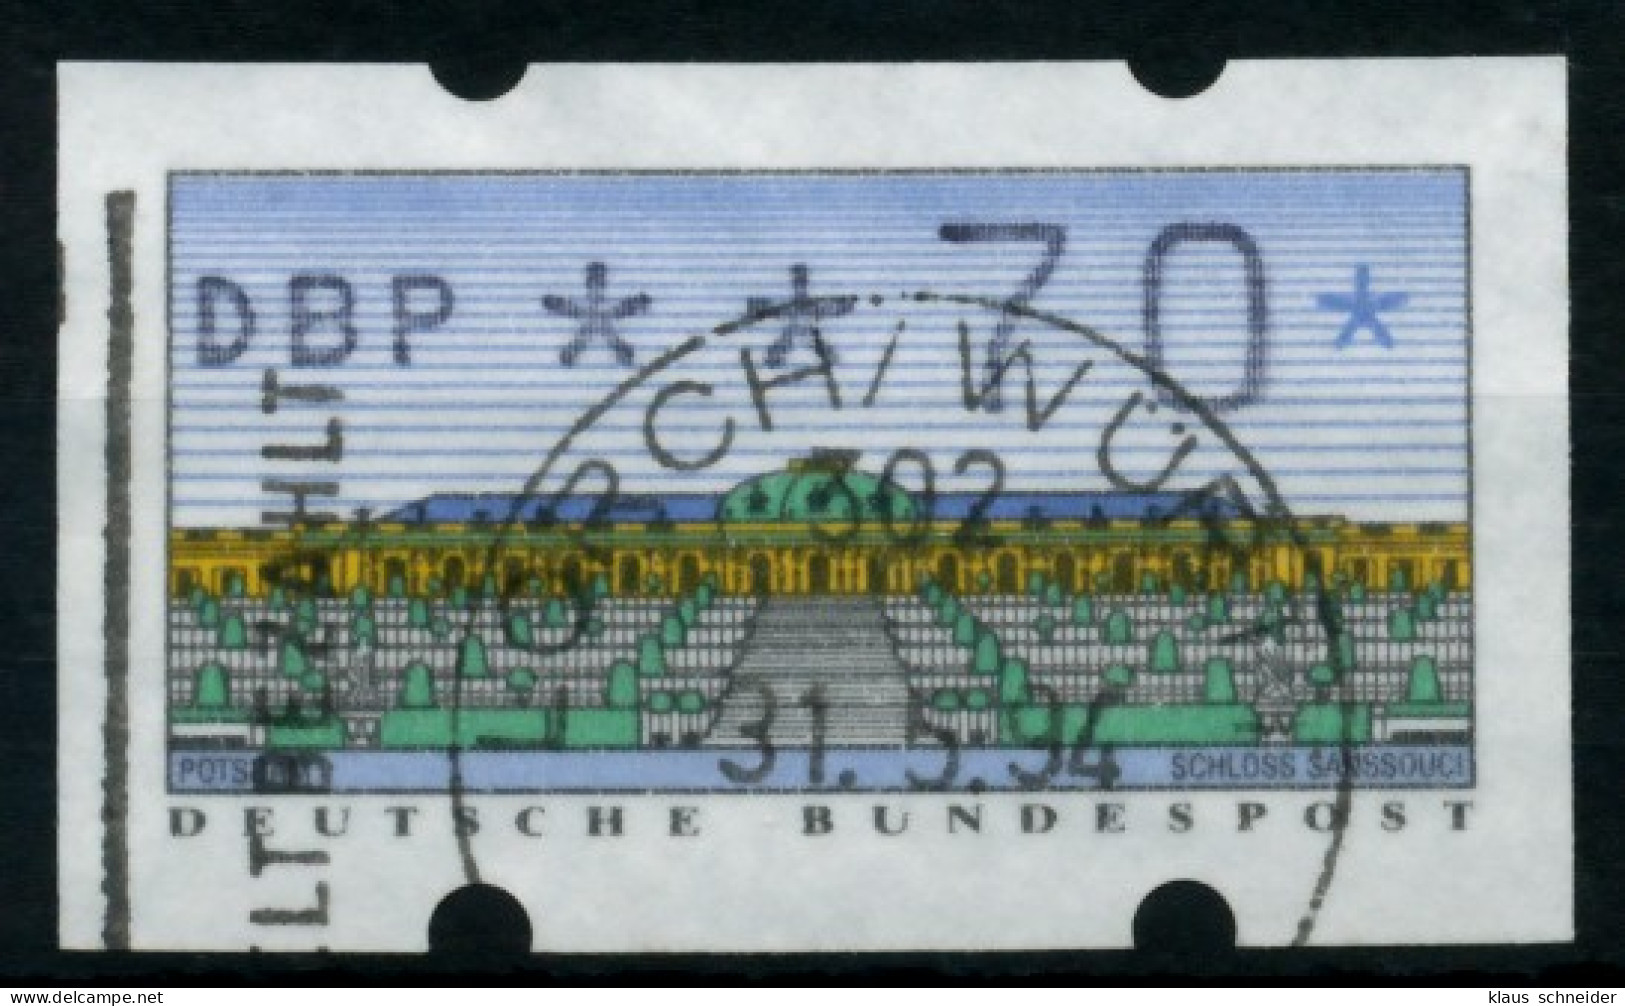 BRD ATM 1993 Nr 2-1.1-0070 Gestempelt X75BFE6 - Viñetas De Franqueo [ATM]